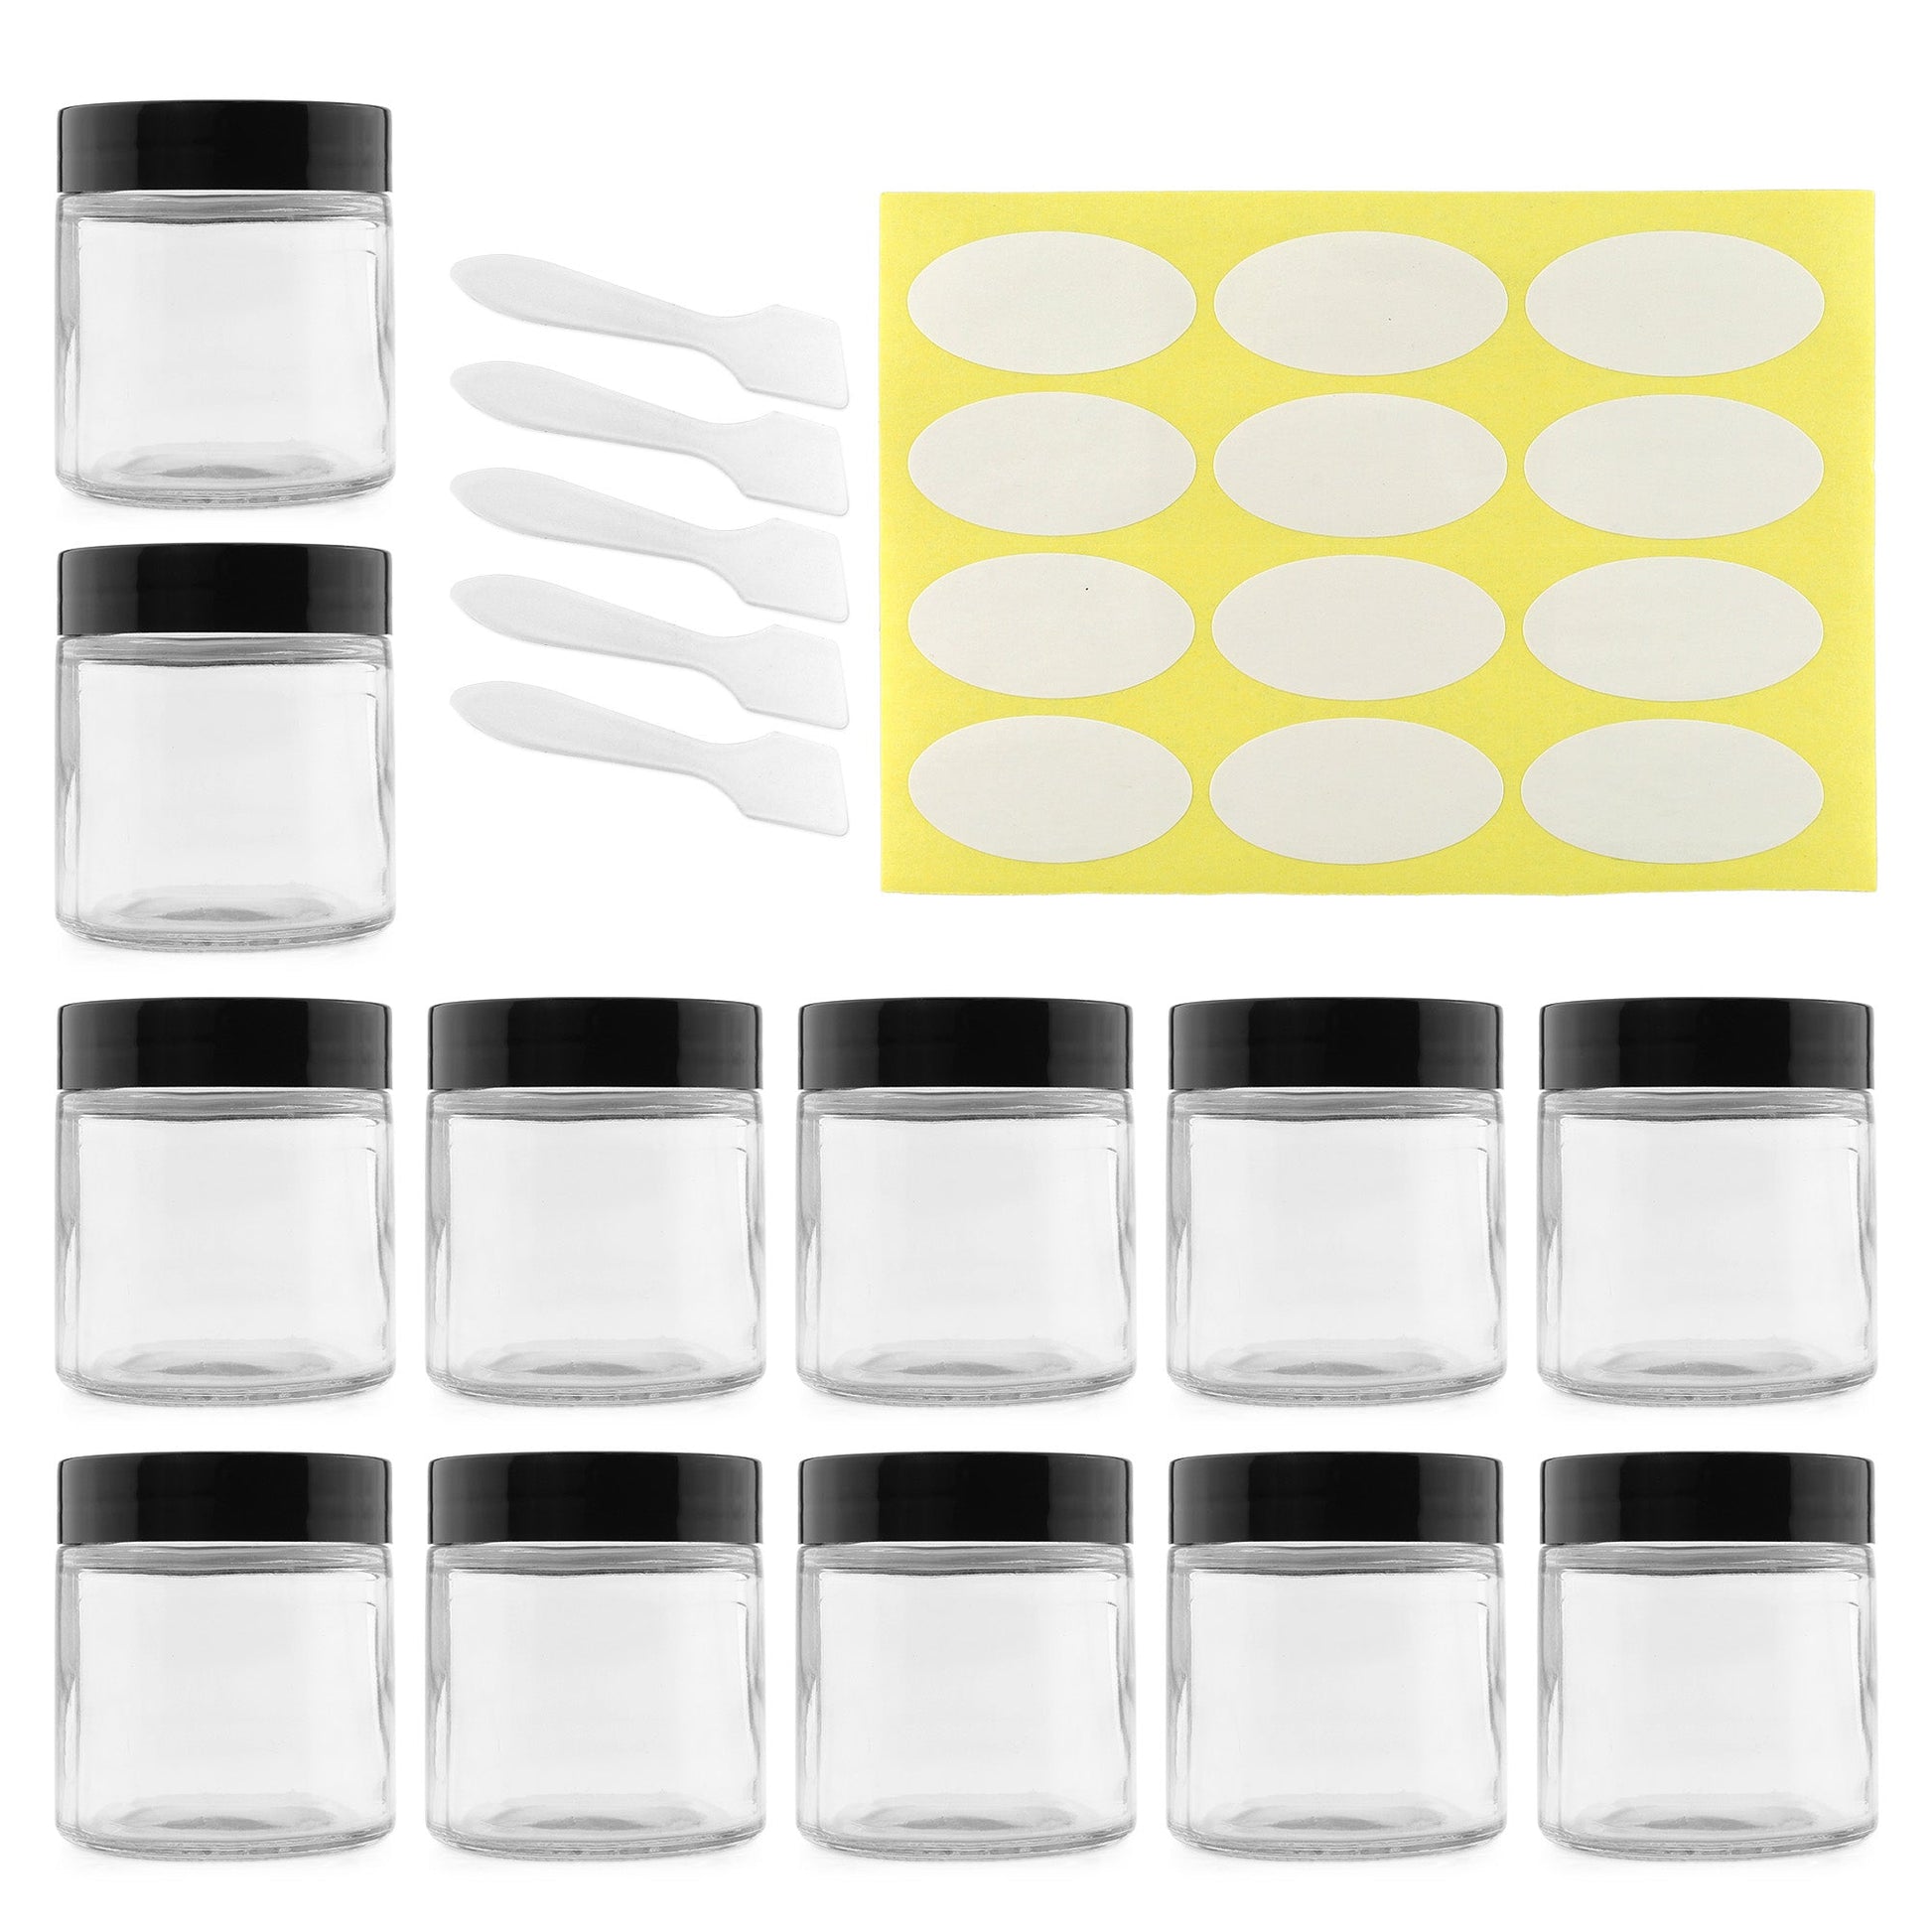 4oz Clear Glass Jars (12-Pack) - sh1320cb04oz